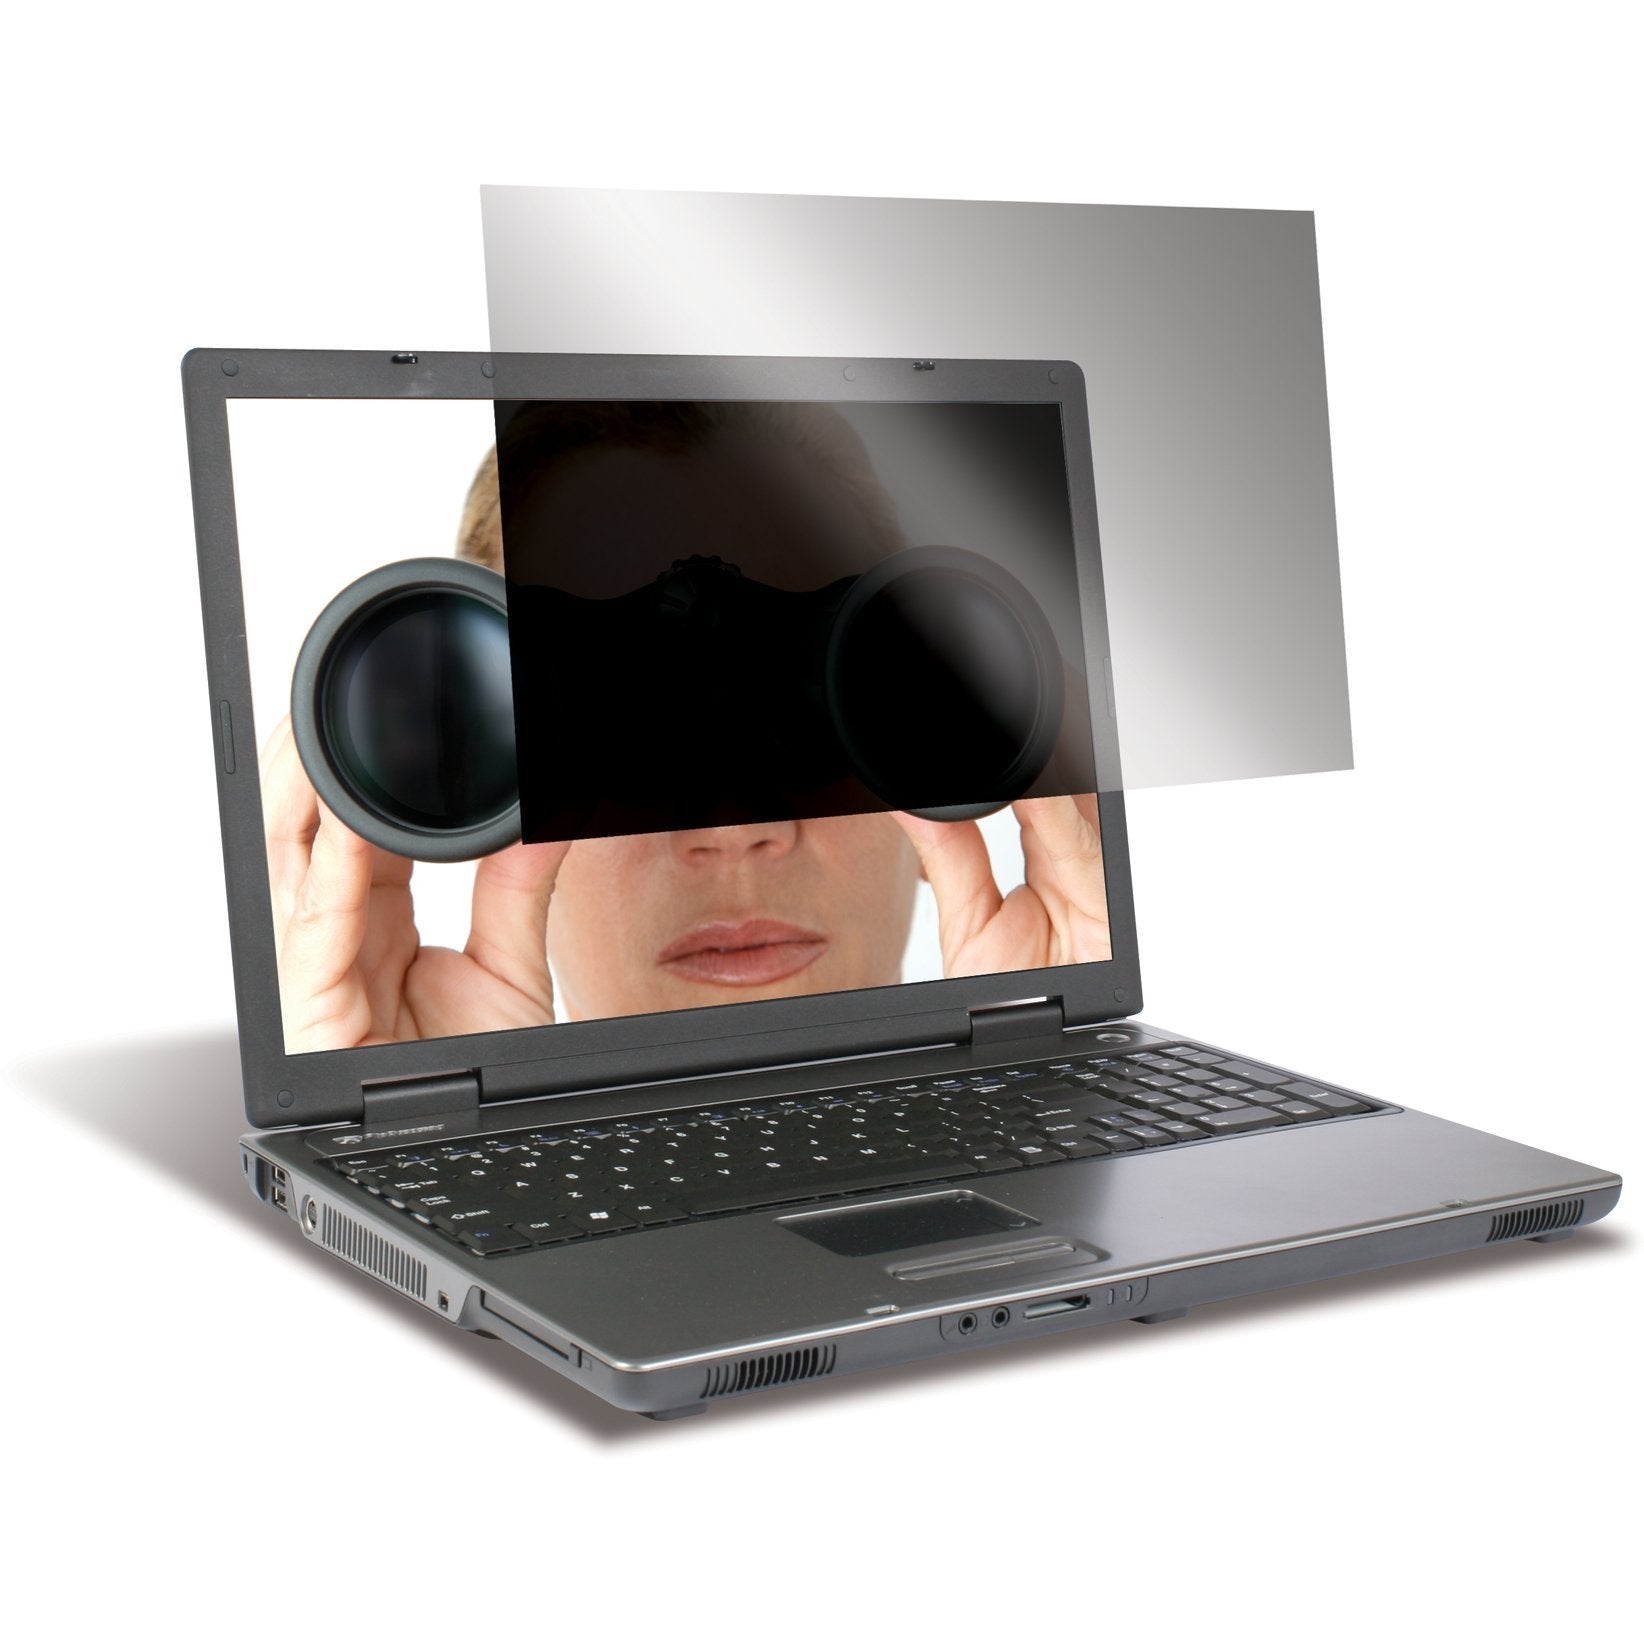 ASF133W9USZ 16:9 Ratio Targus 4Vu Privacy Filter Screen for 13.3-Inch Widescreen Laptops 